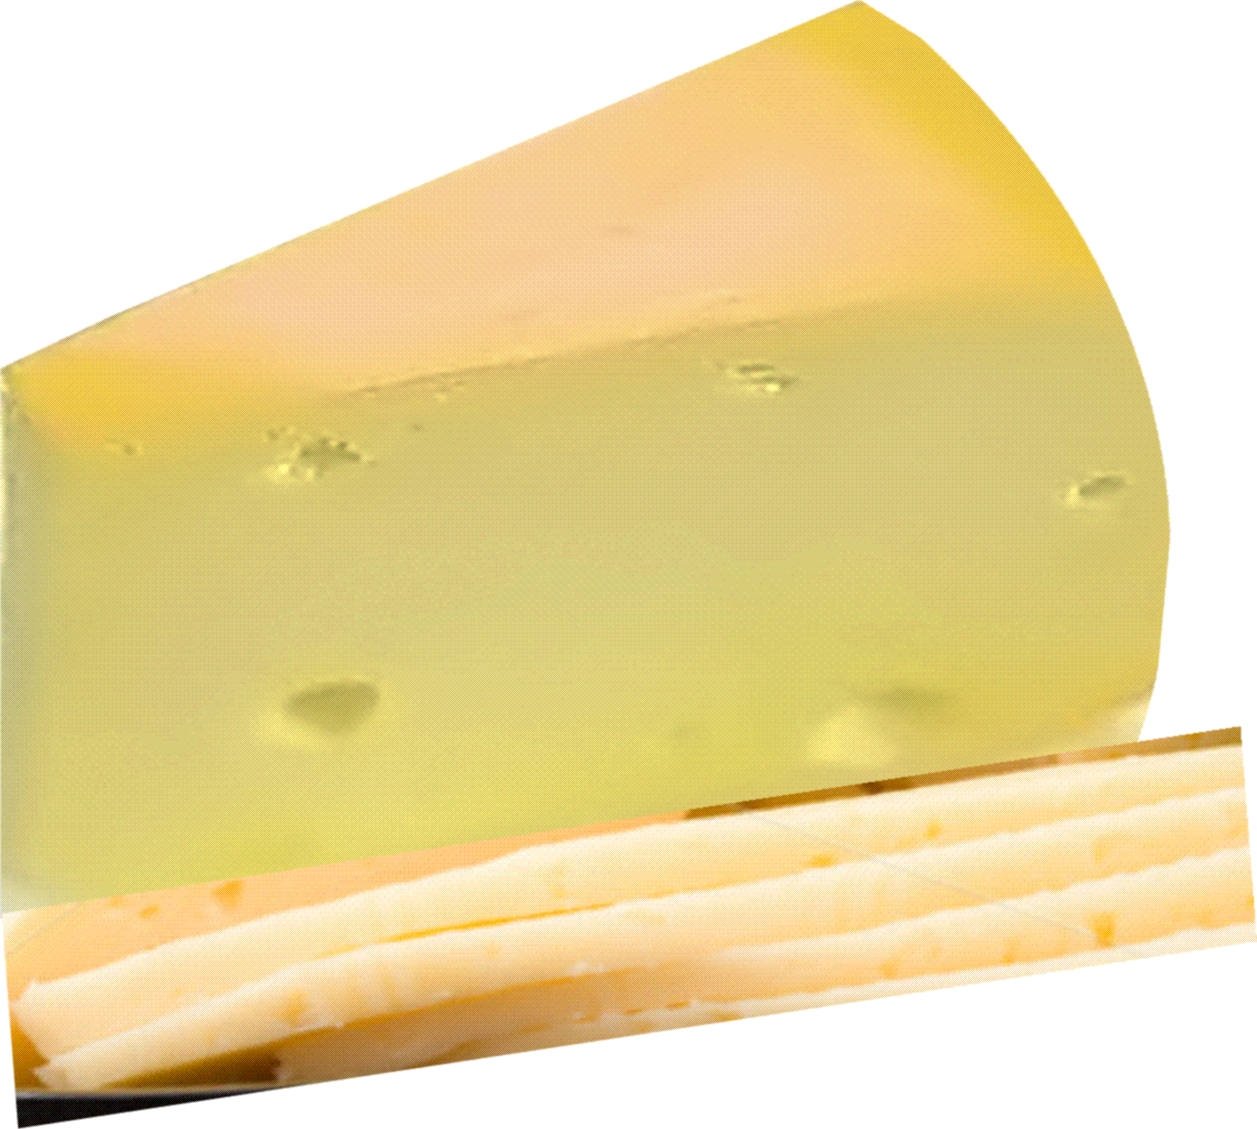 cheese(牛奶製品)